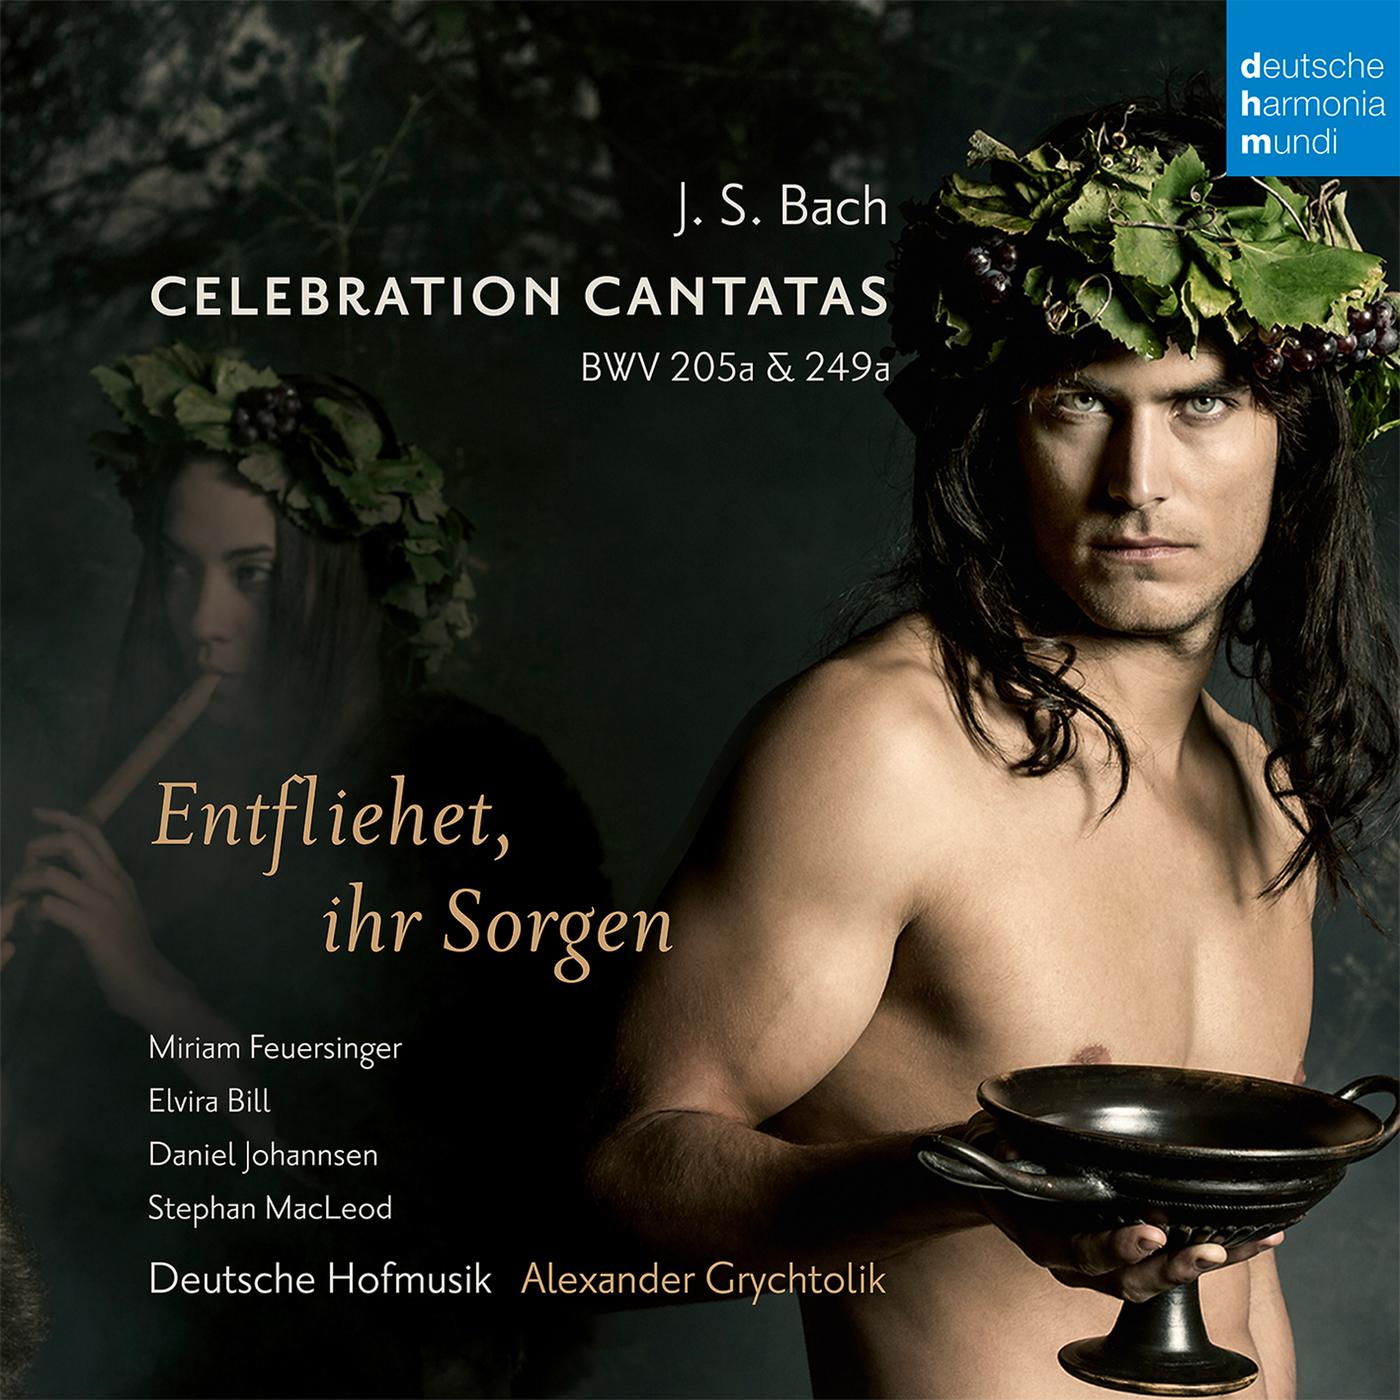 Bach: Celebration Cantatas  Blast L rmen ihr Feinde, BWV 205a  Entfliehet ihr Sorgen, BWV 249a Sch ferkantate